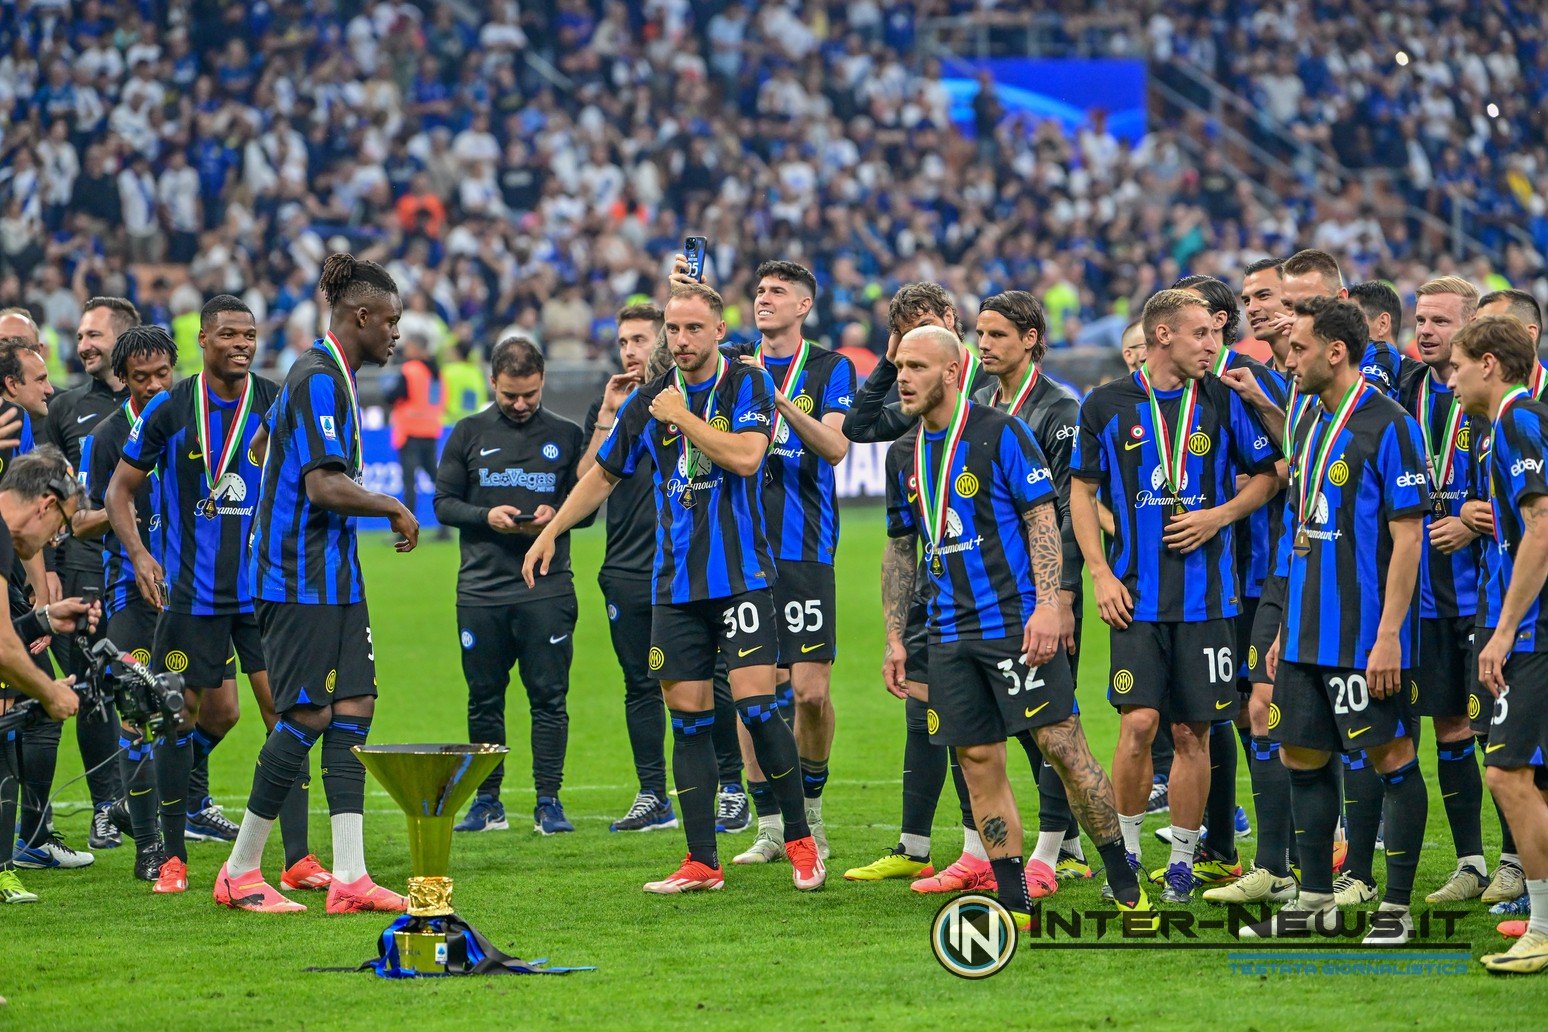 Verona Inter 